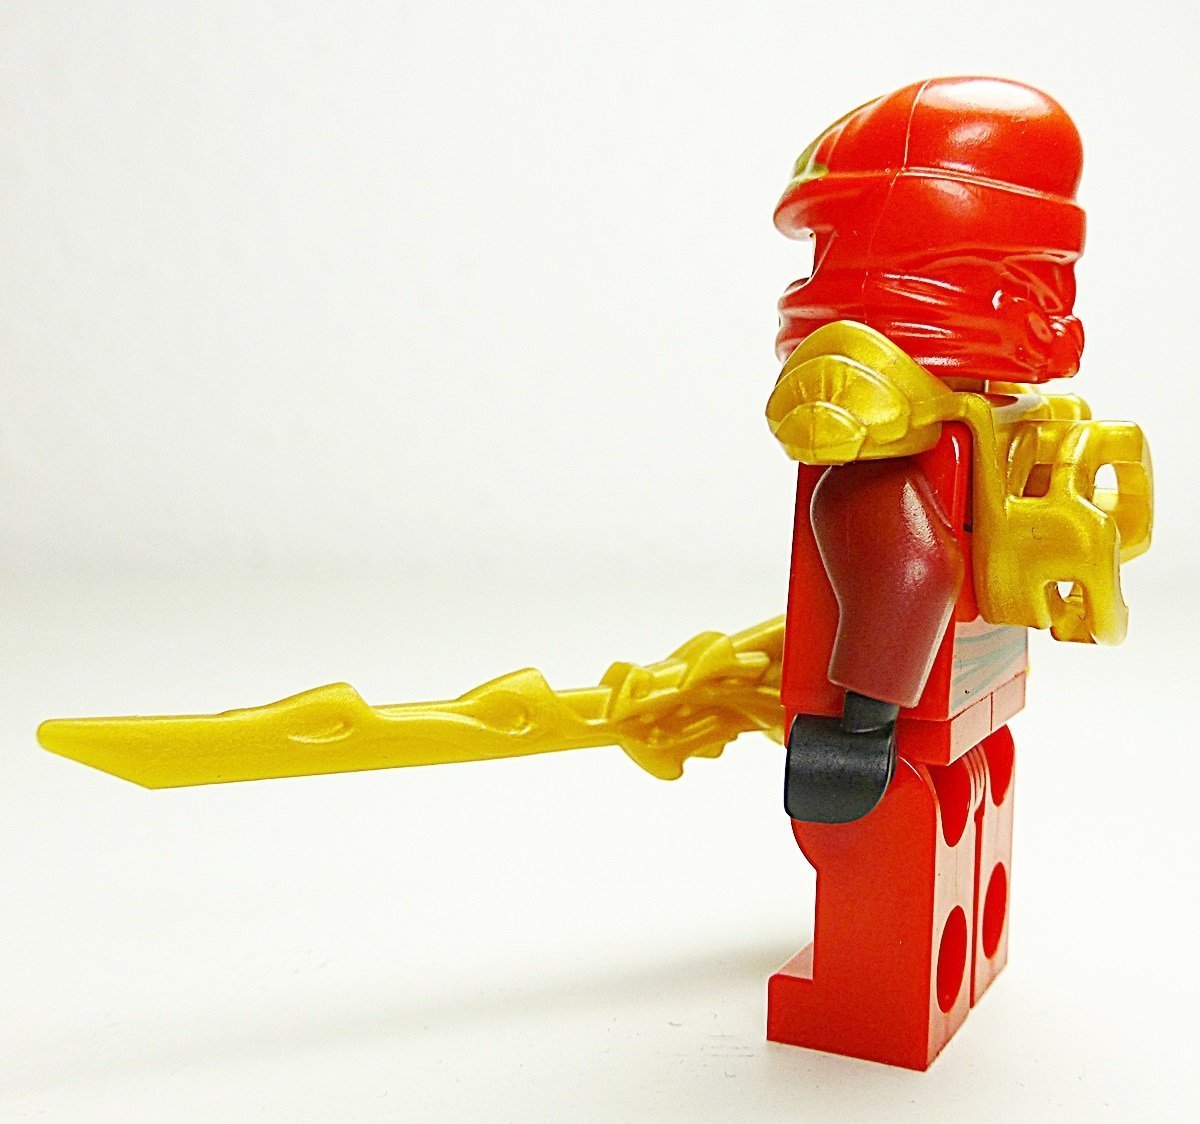 LEGO Ninjago - Kai ZX with Armor and Dragon Sword